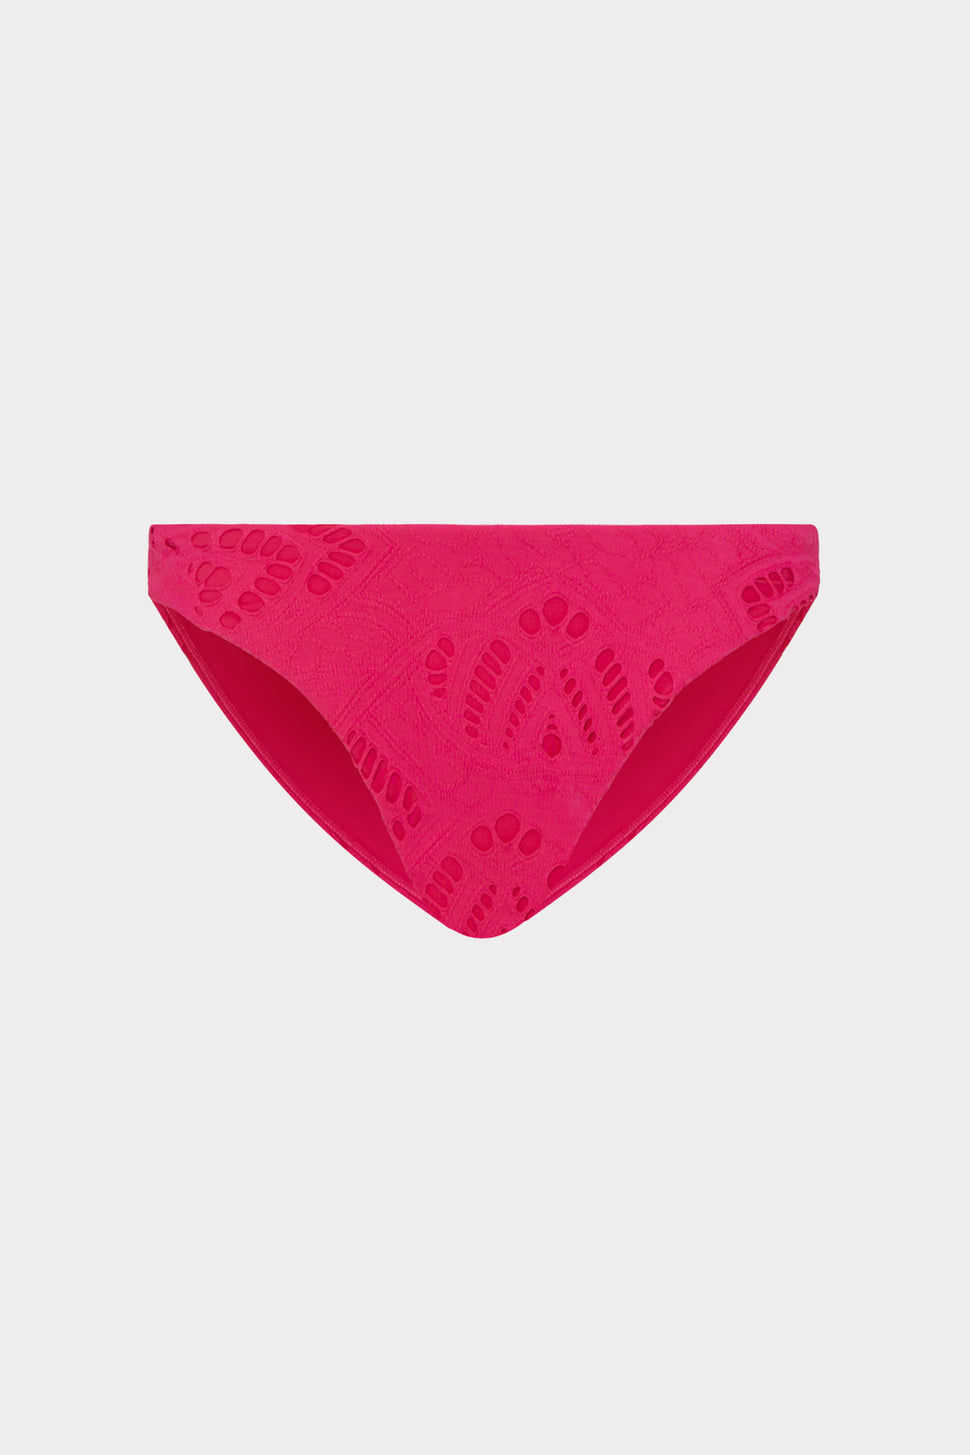 NEW VICTORIA'S SECRET Pink & White Stripe with Ruffle Bikini Bottom - Sz.  Small